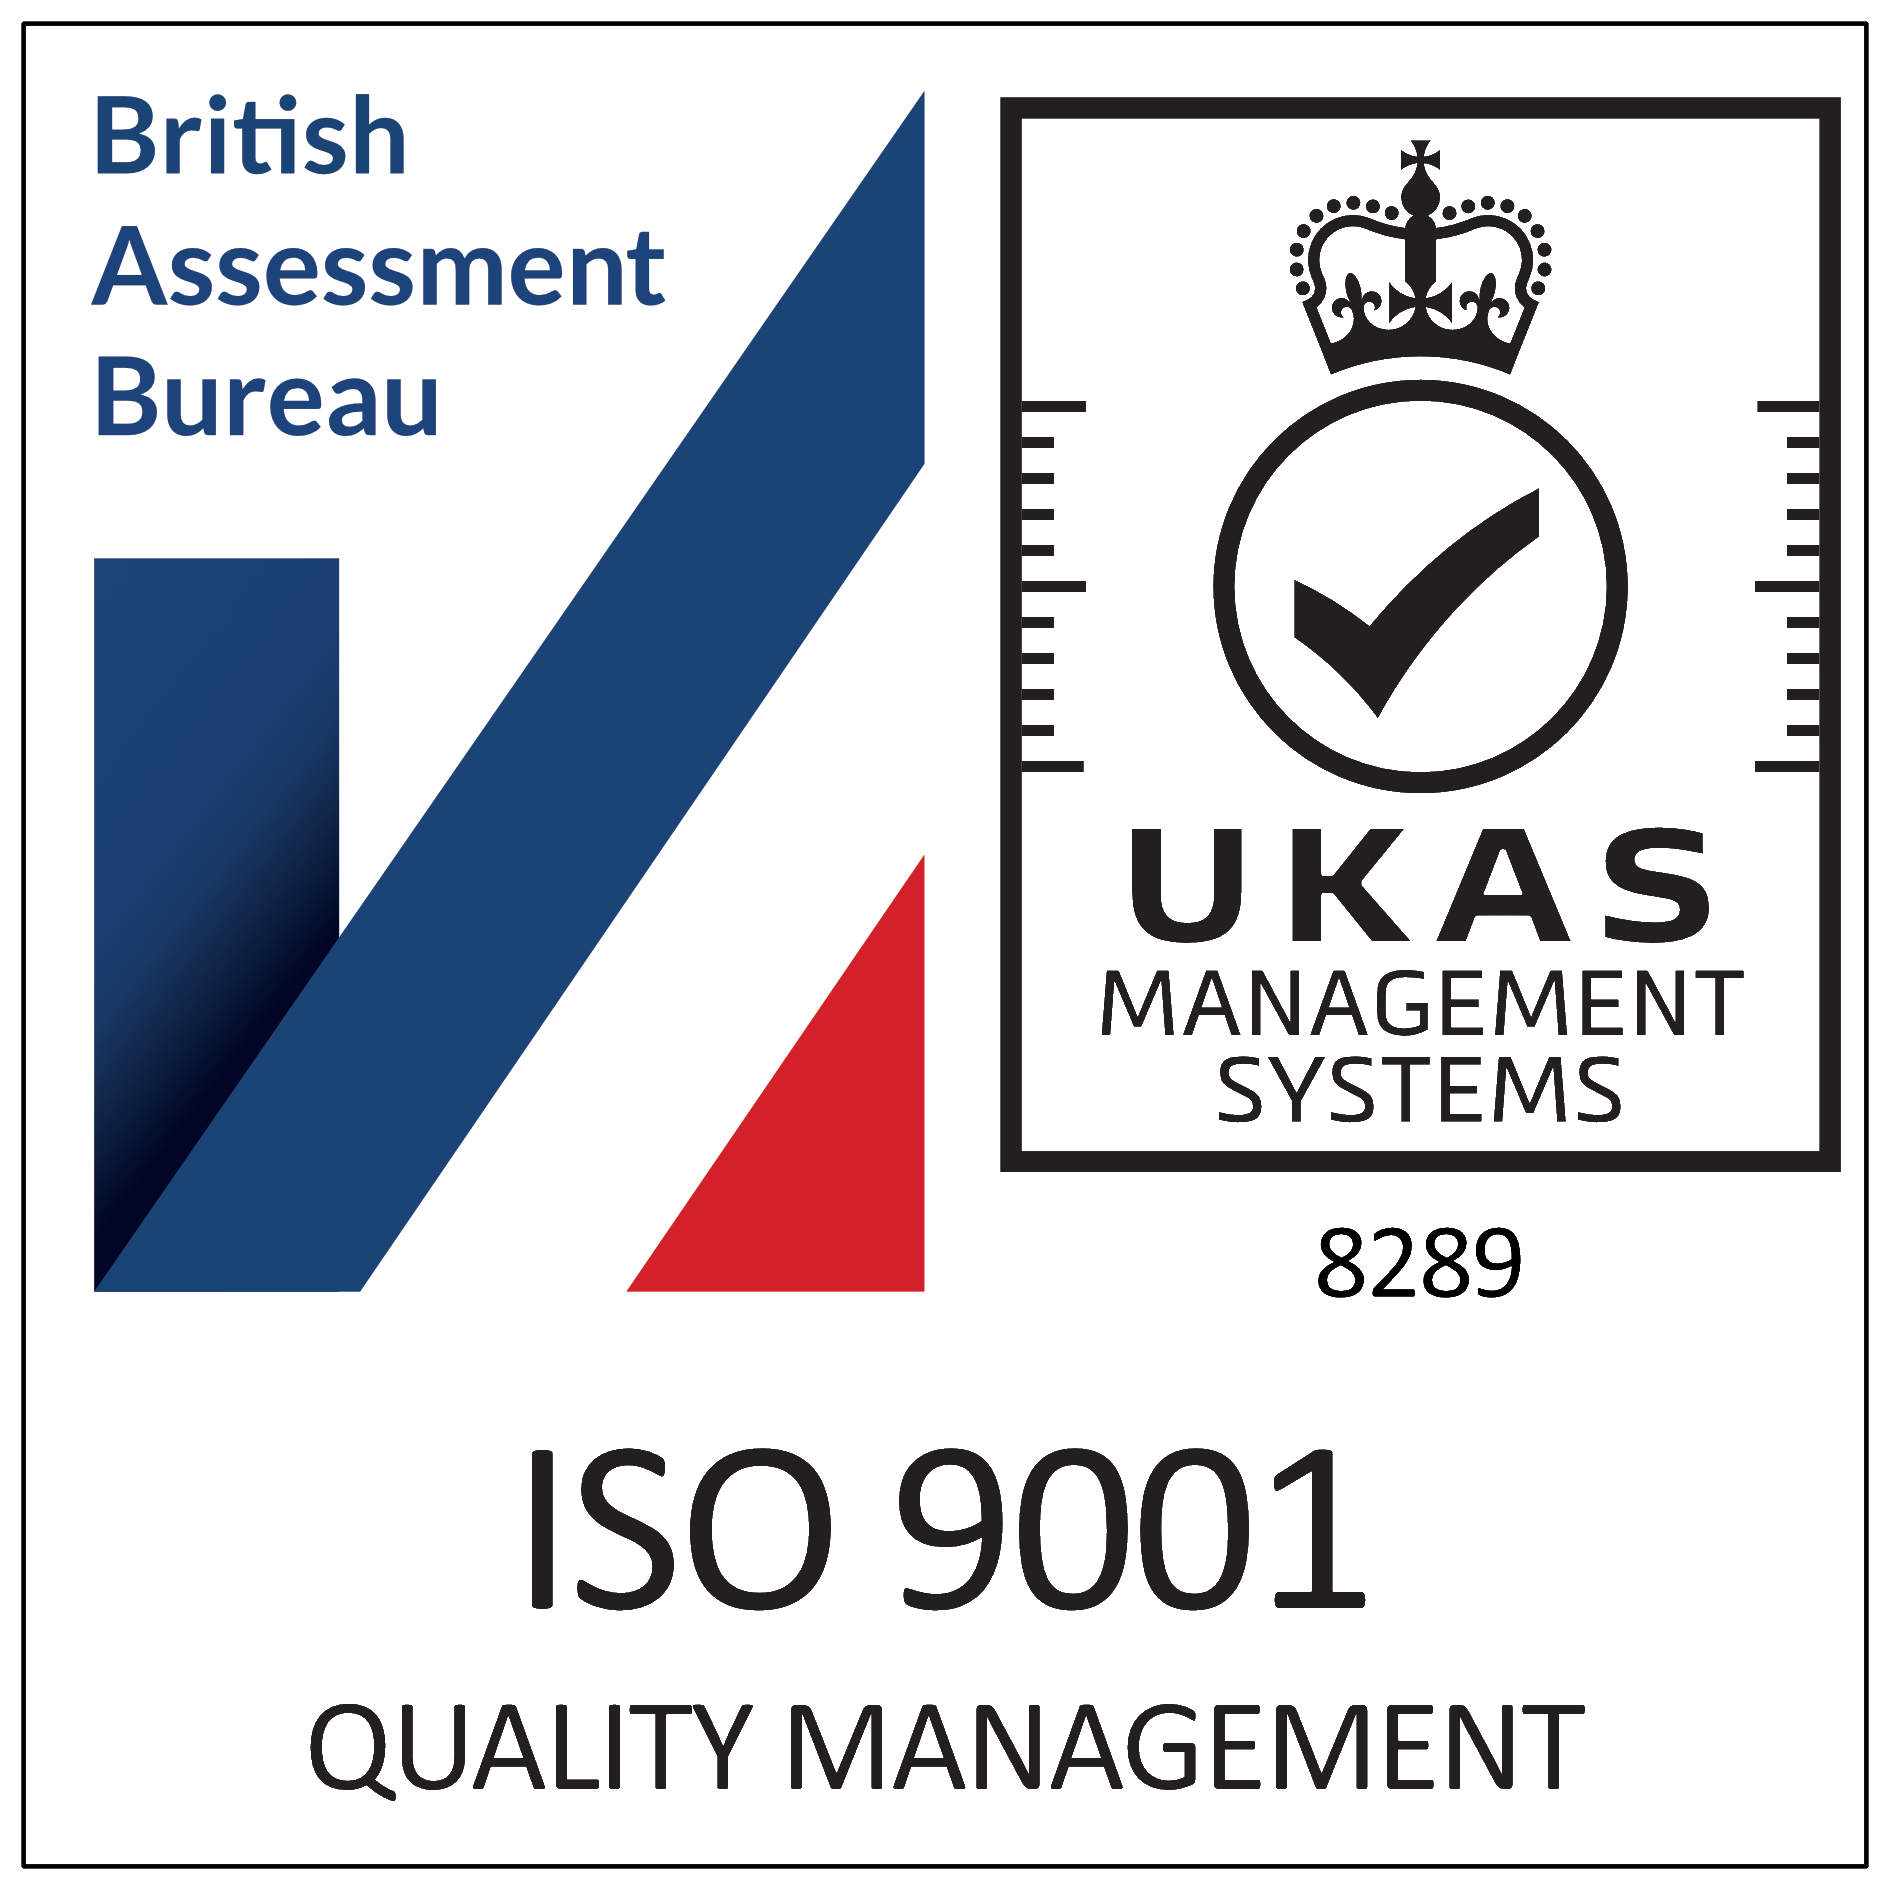 British Assessment Bureau badge 9001 Quality Management